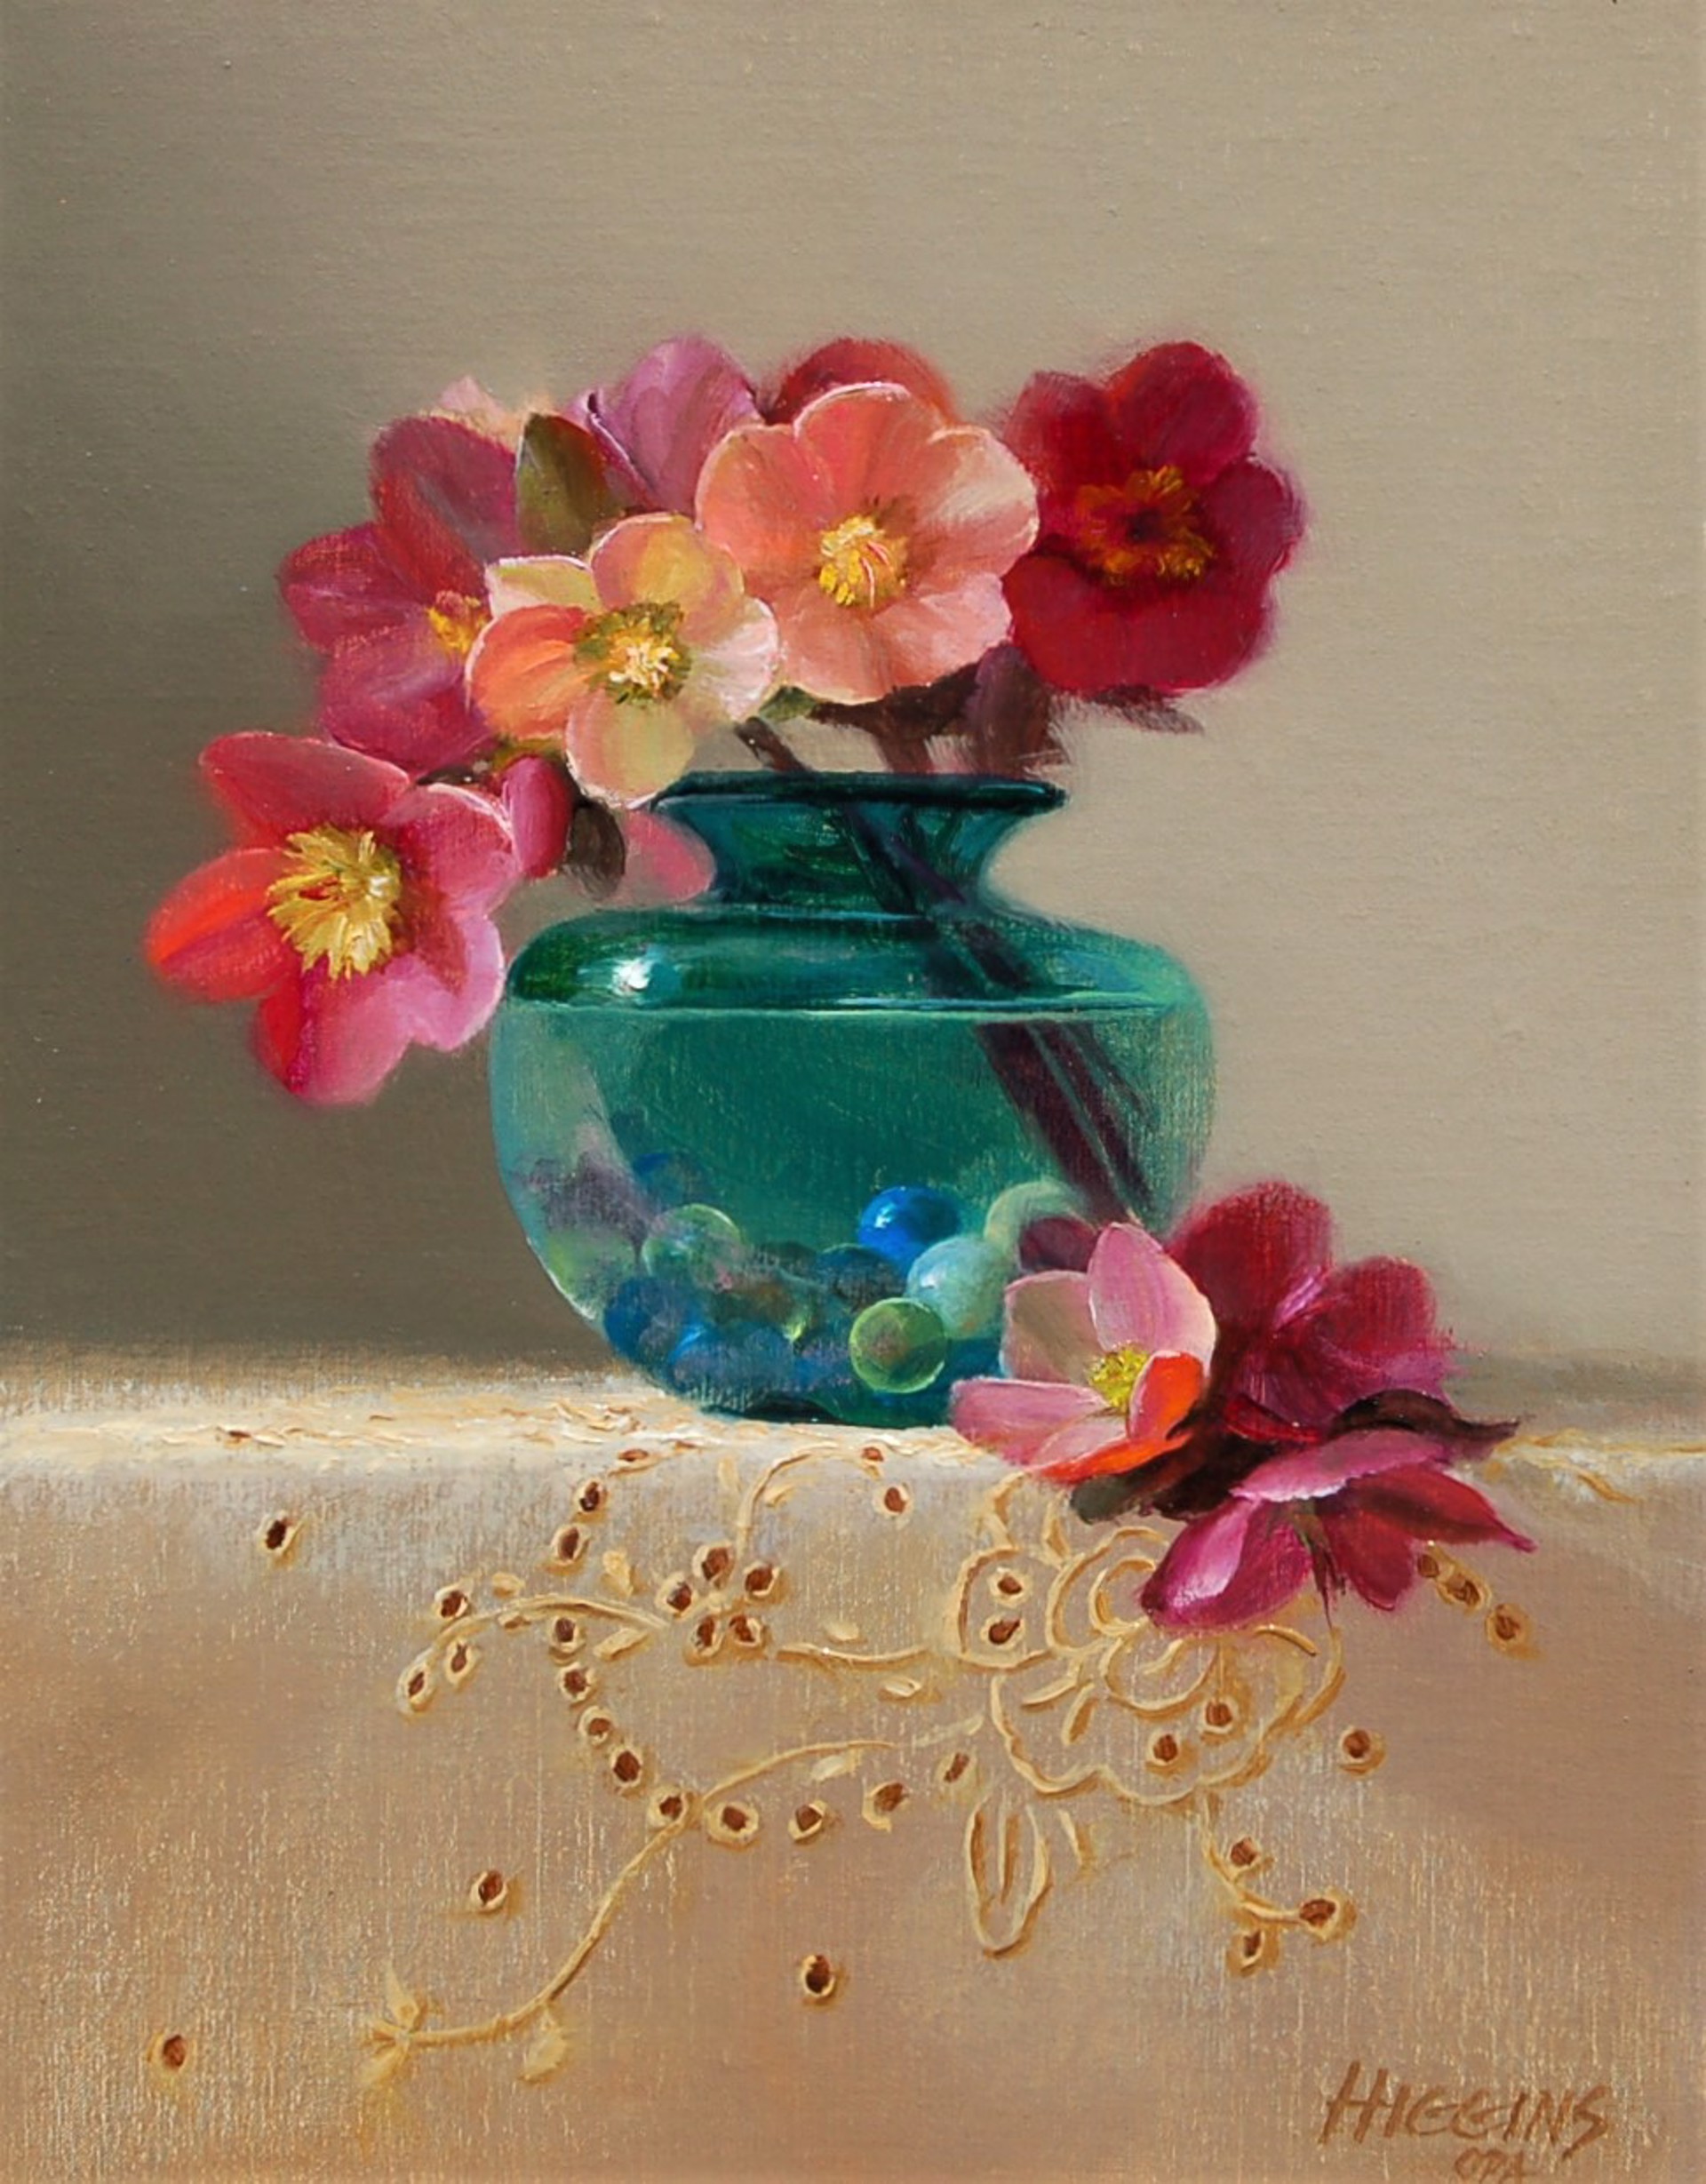 Winter Roses by Wendy Higgins